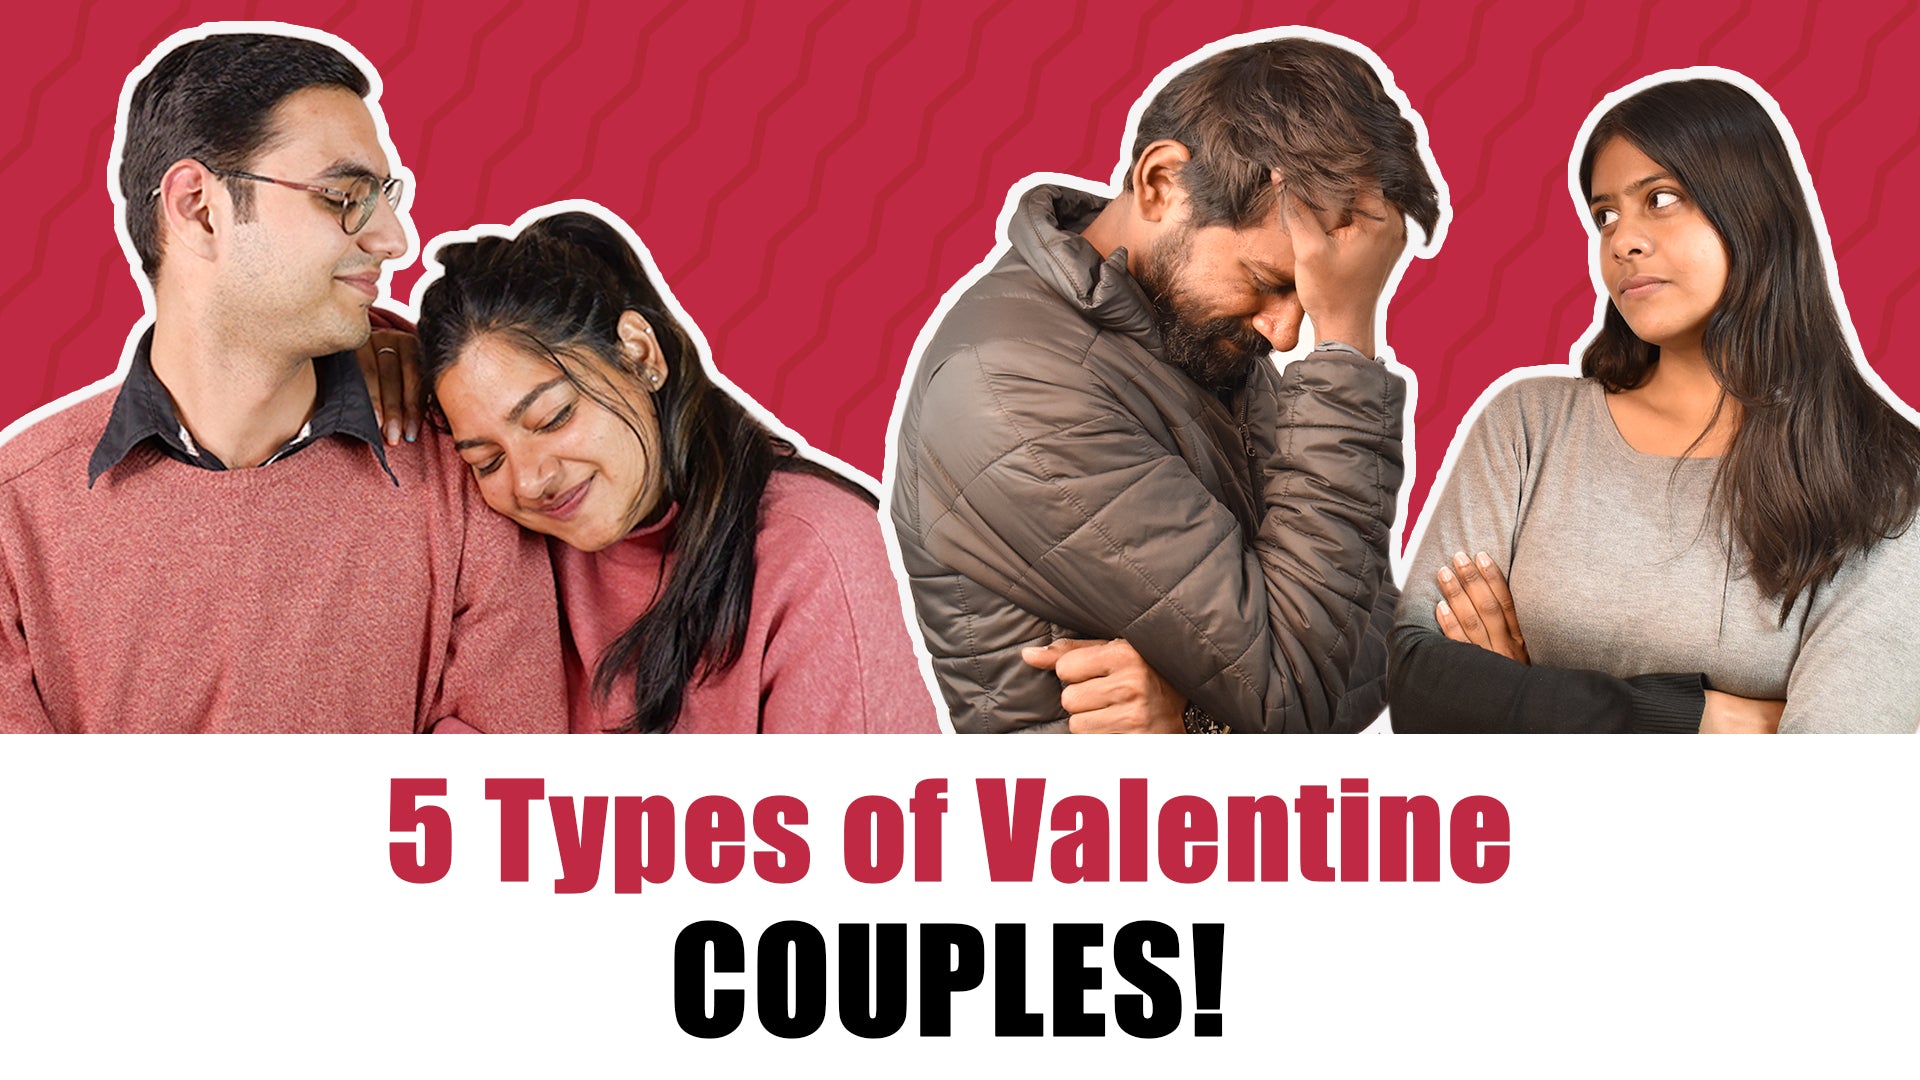 Types of Couples on Valentine's